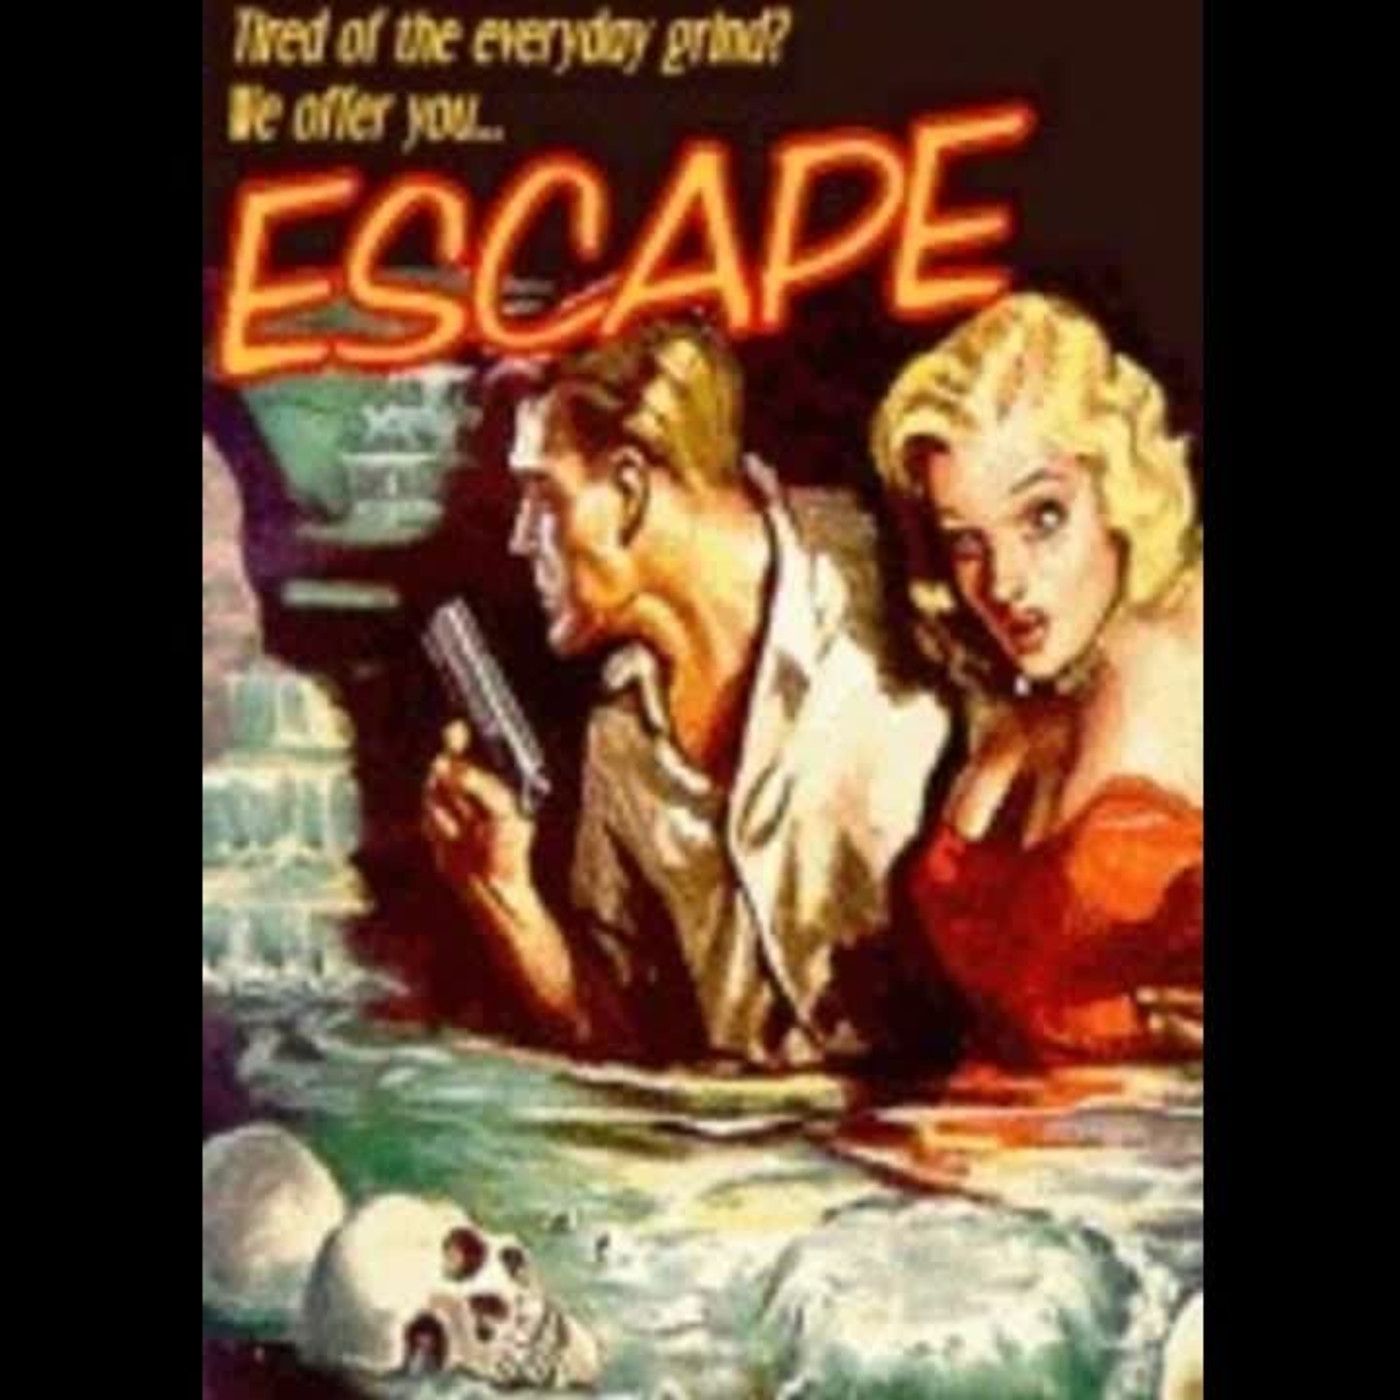 Escape - The Fourth Man (Paul Frees)